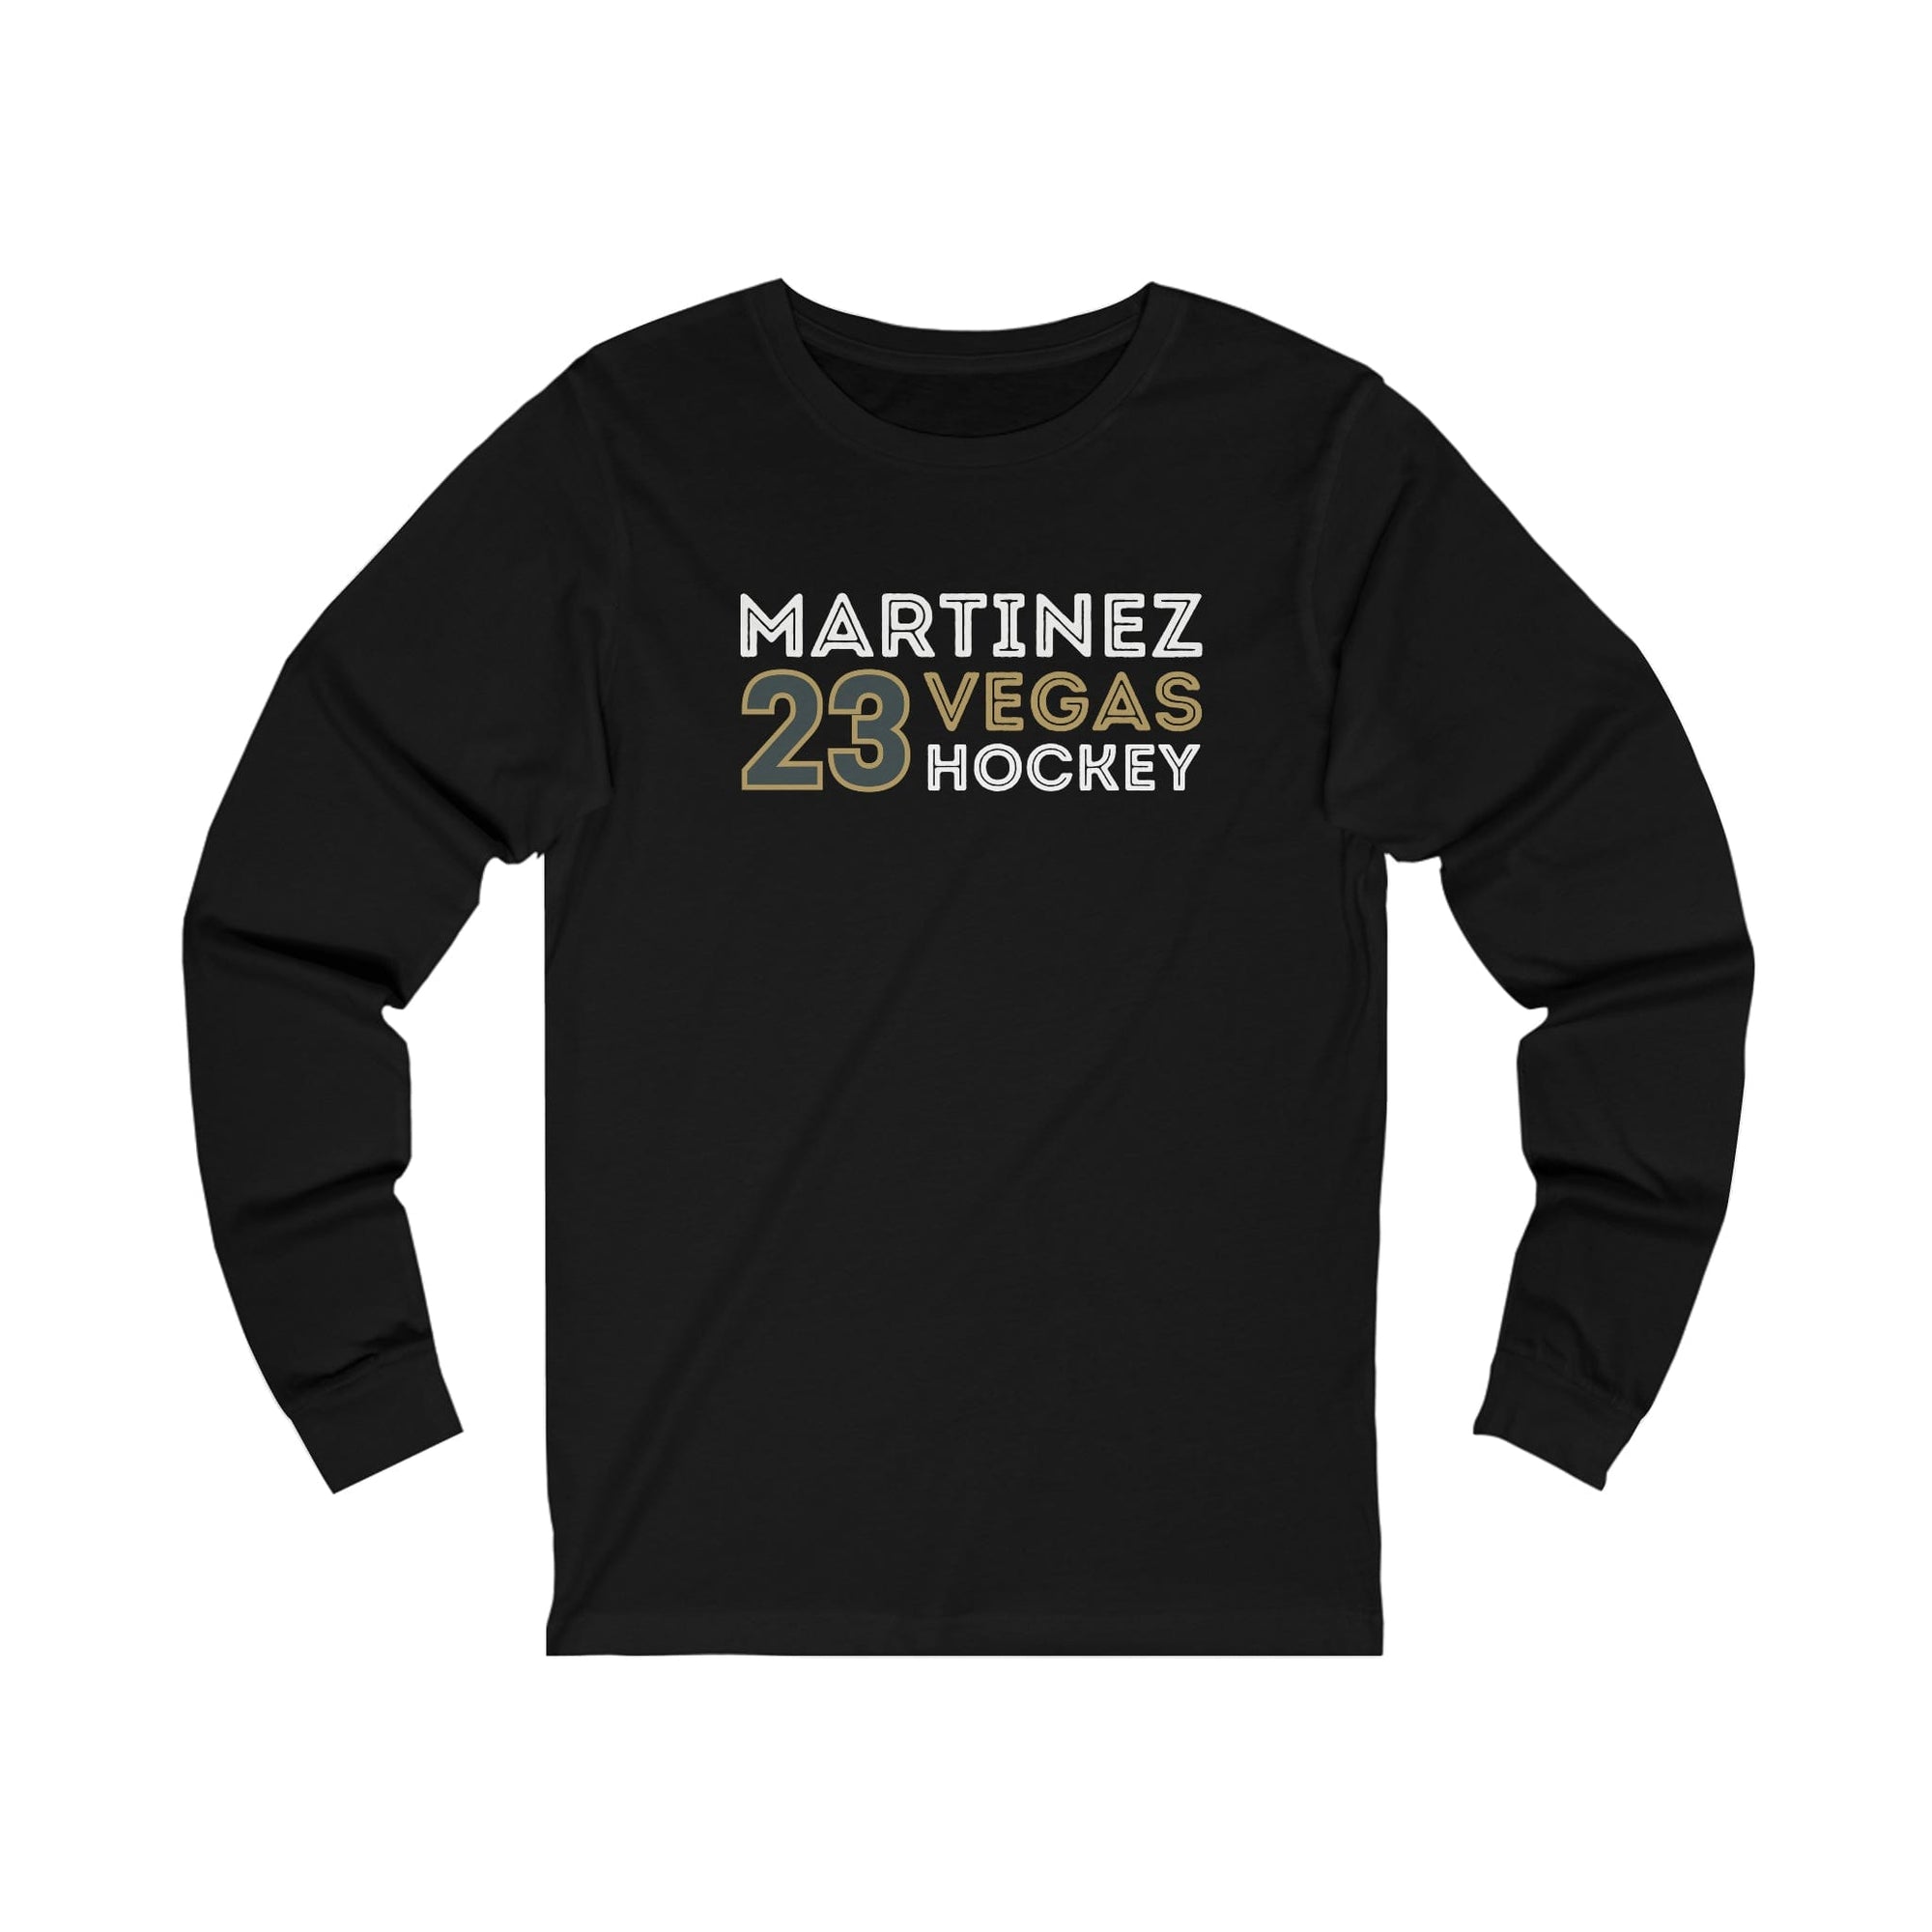 Alec Martinez Jerseys, Alec Martinez Shirts, Apparel, Gear